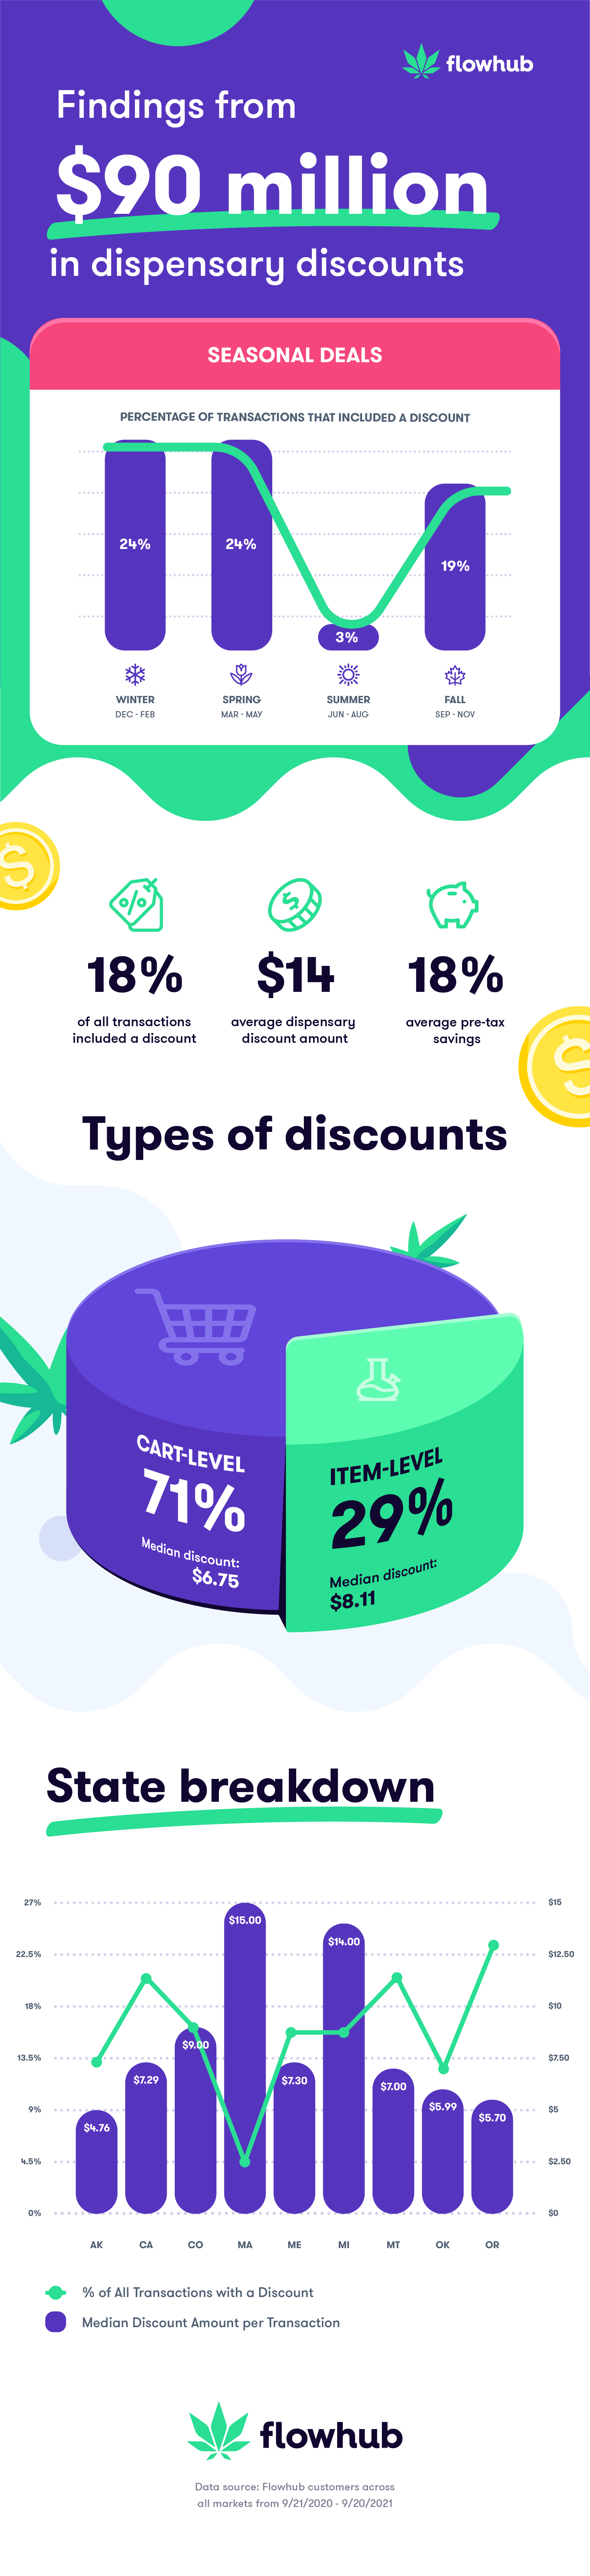 infographic - dispensary discounts, deals, specials data